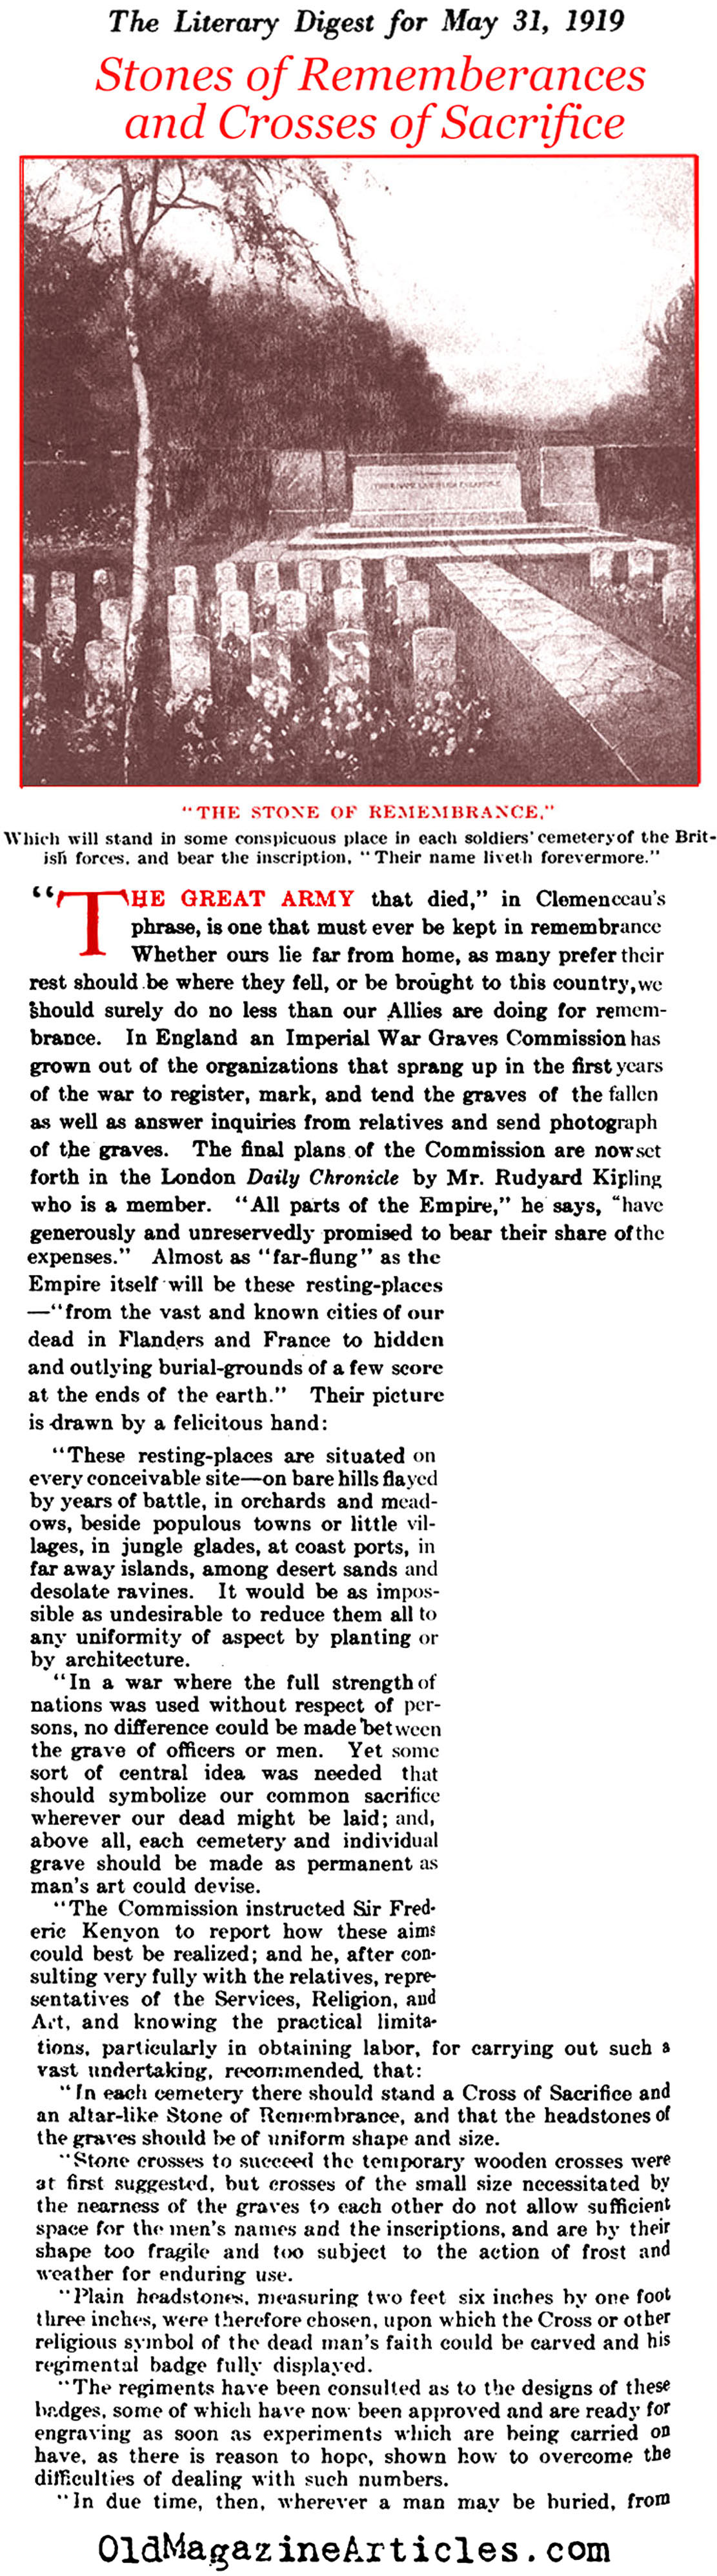 Britain Buries Her Own (Literary Digest, 1919)